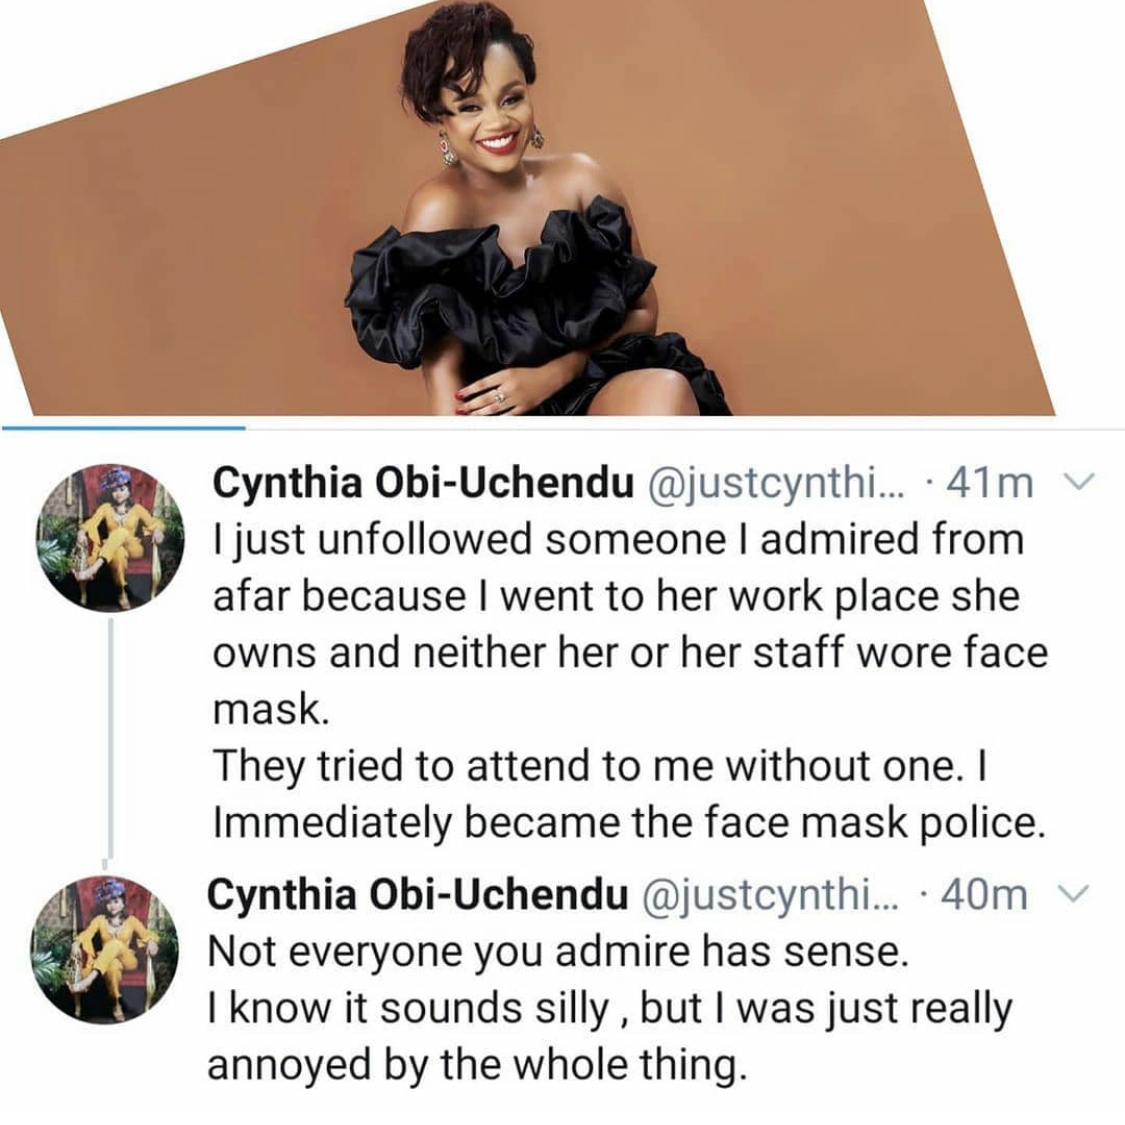 Obi-Uchendu’s tweets